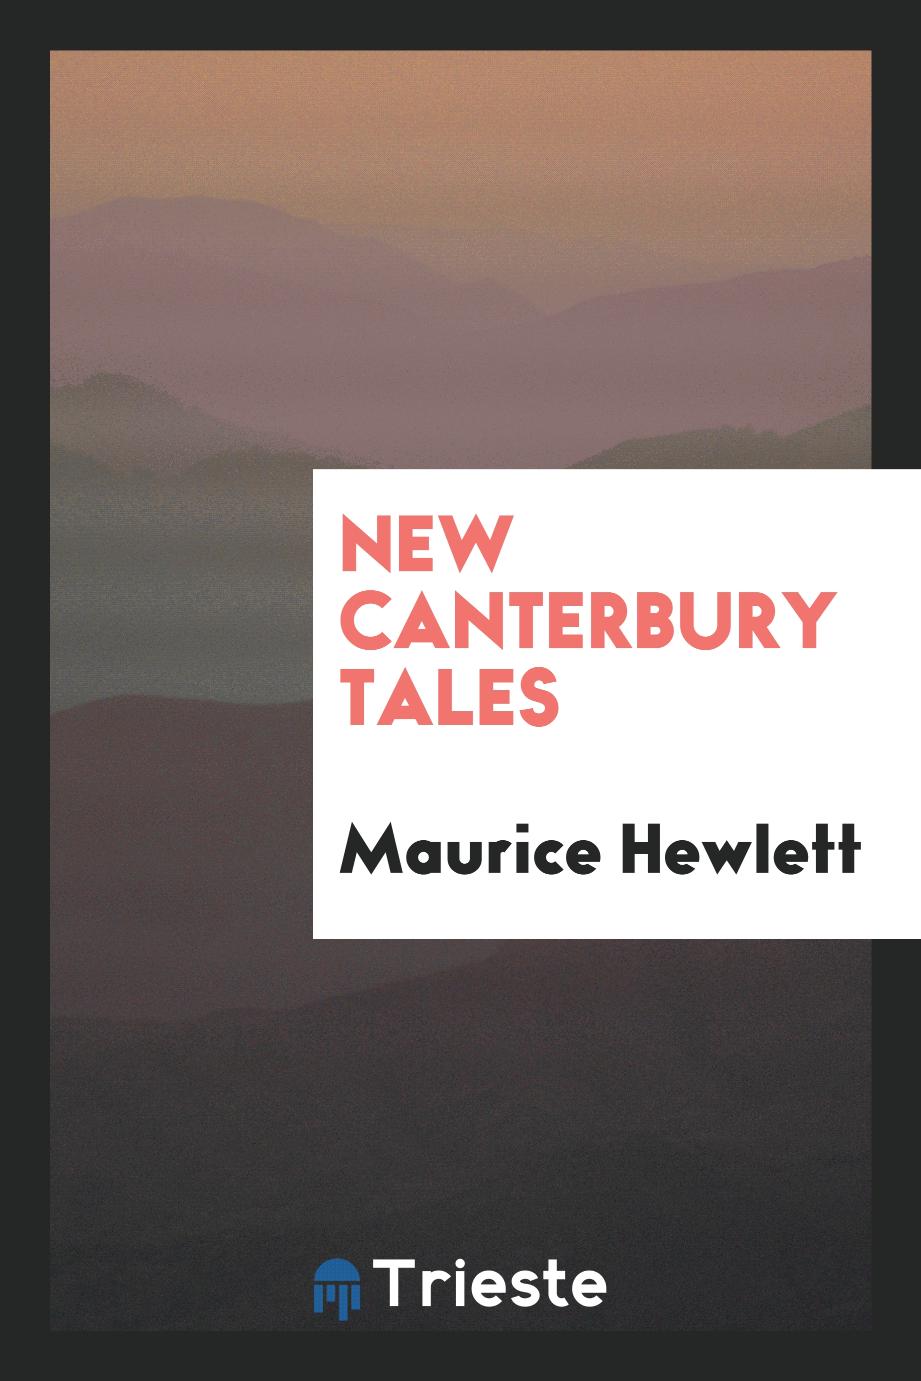 New Canterbury tales